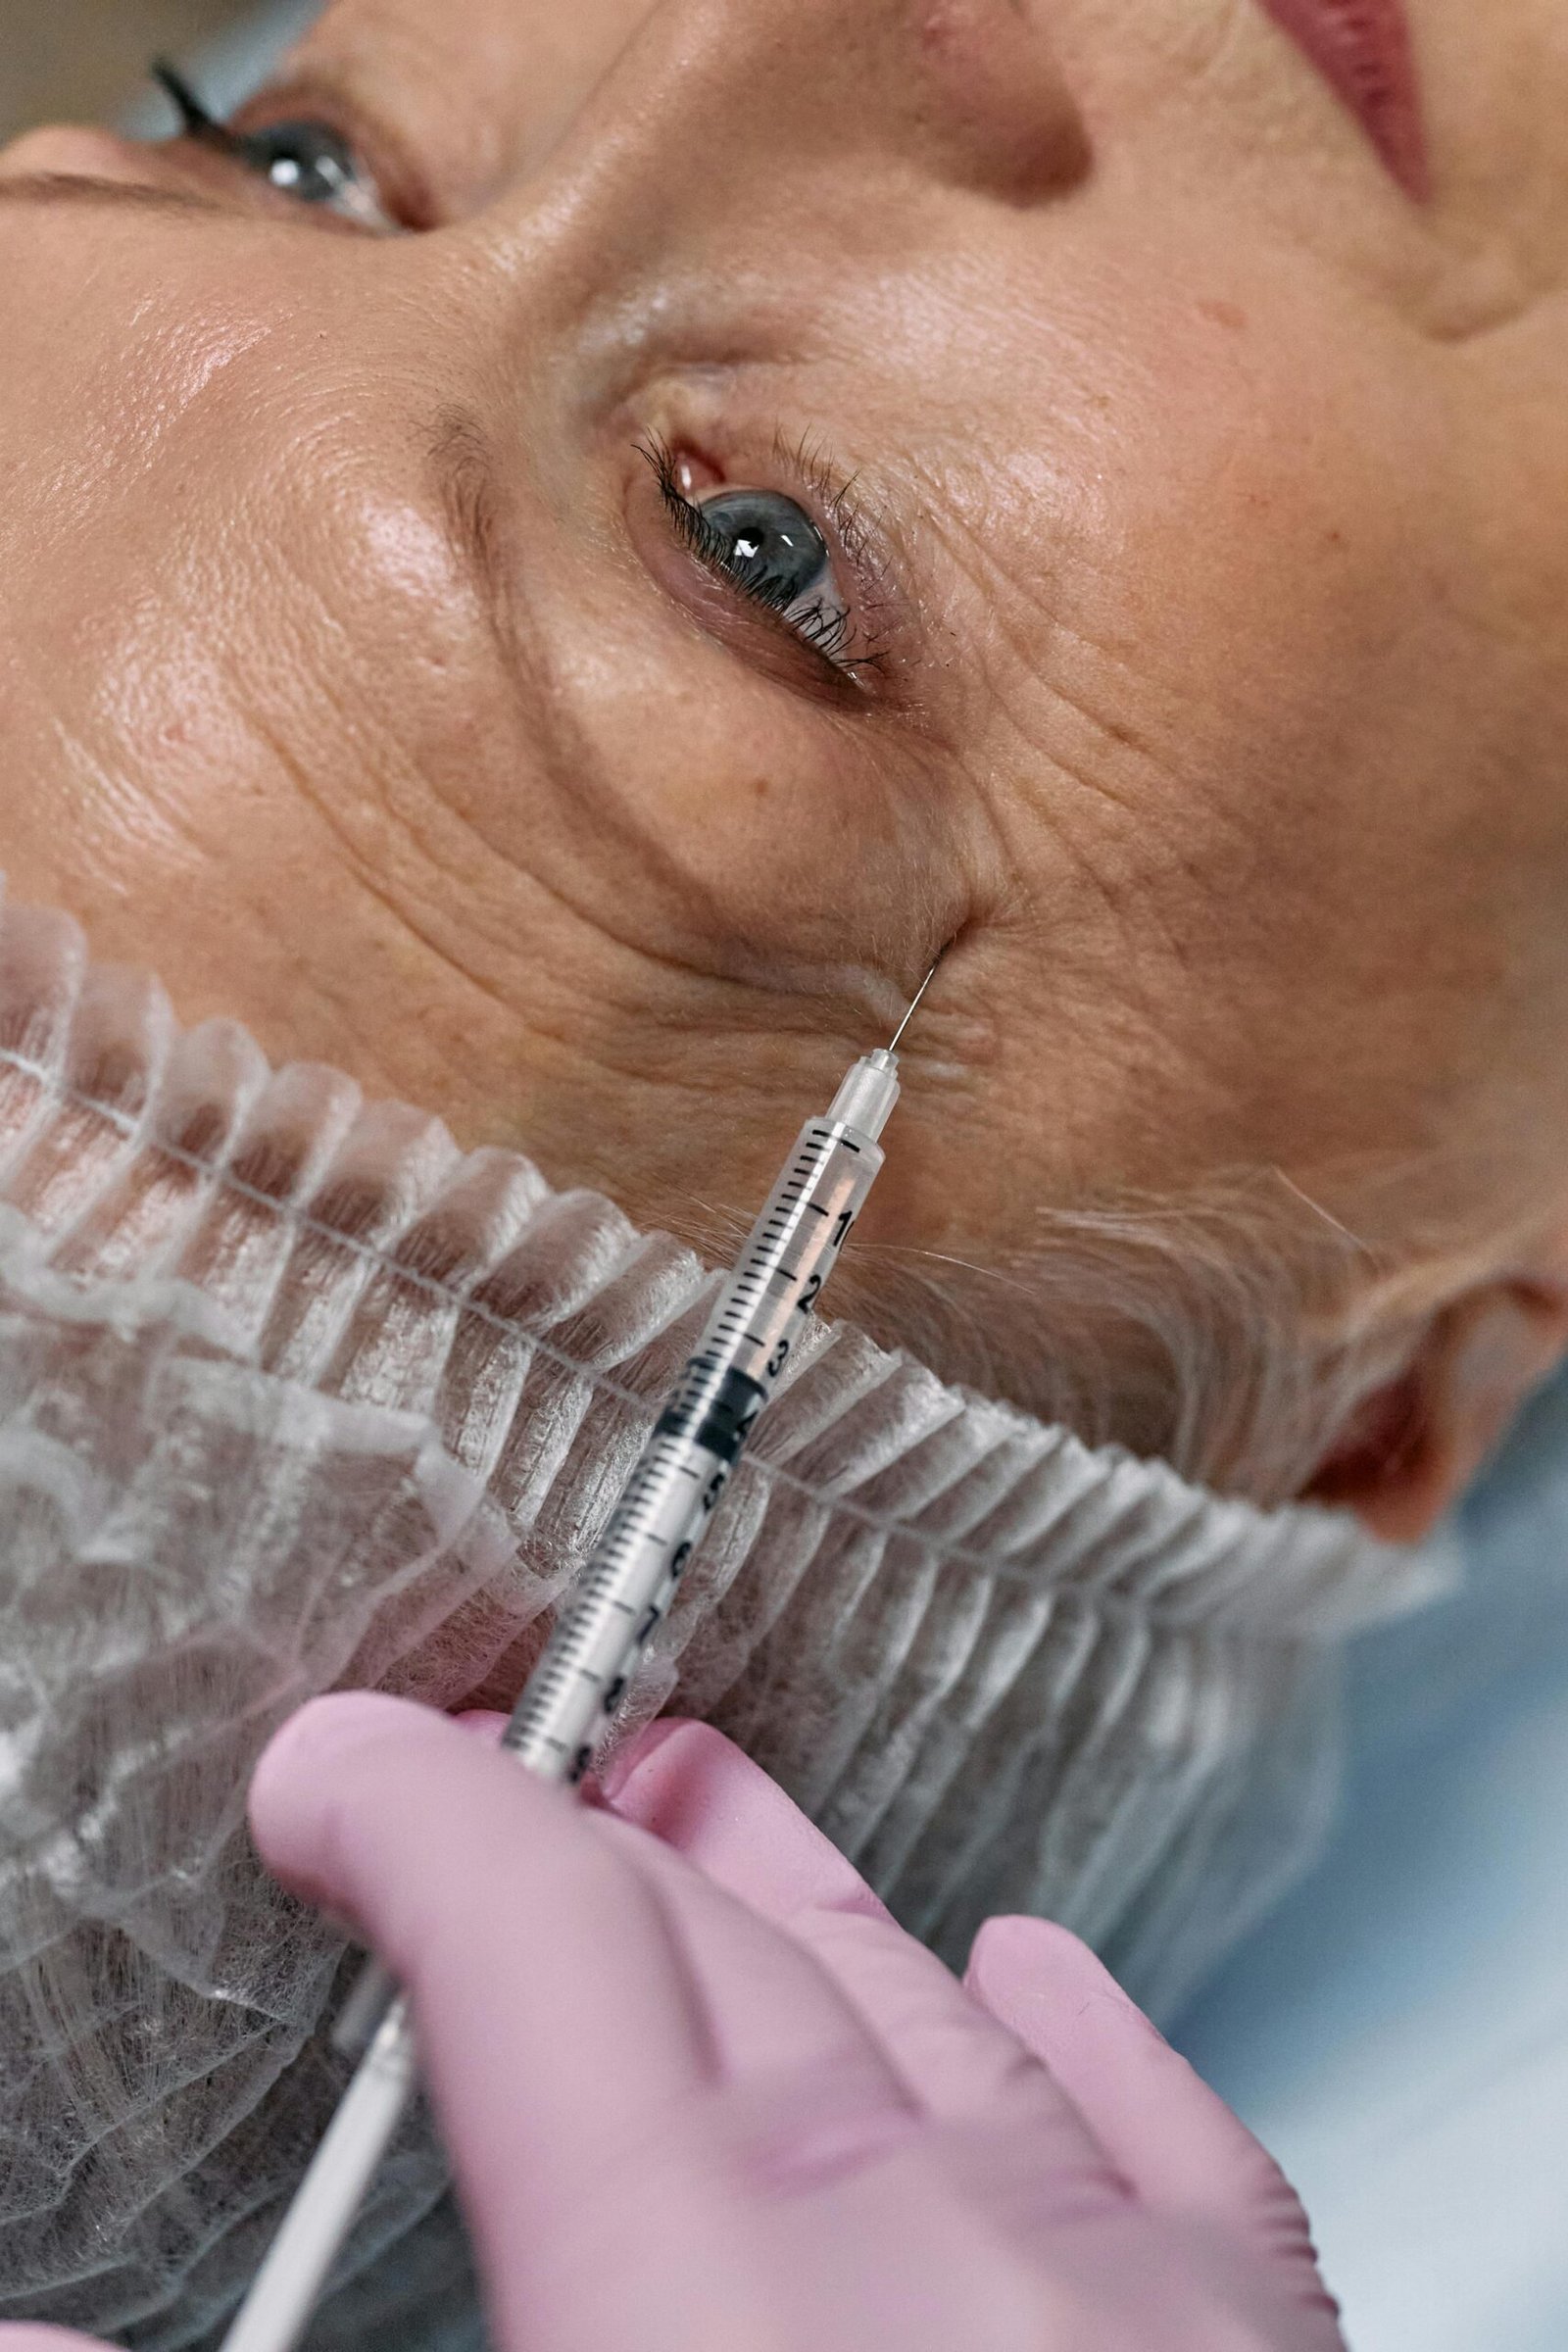 Beyond Botox: Natural Anti-Aging Remedies That You Haven’t Heard Of